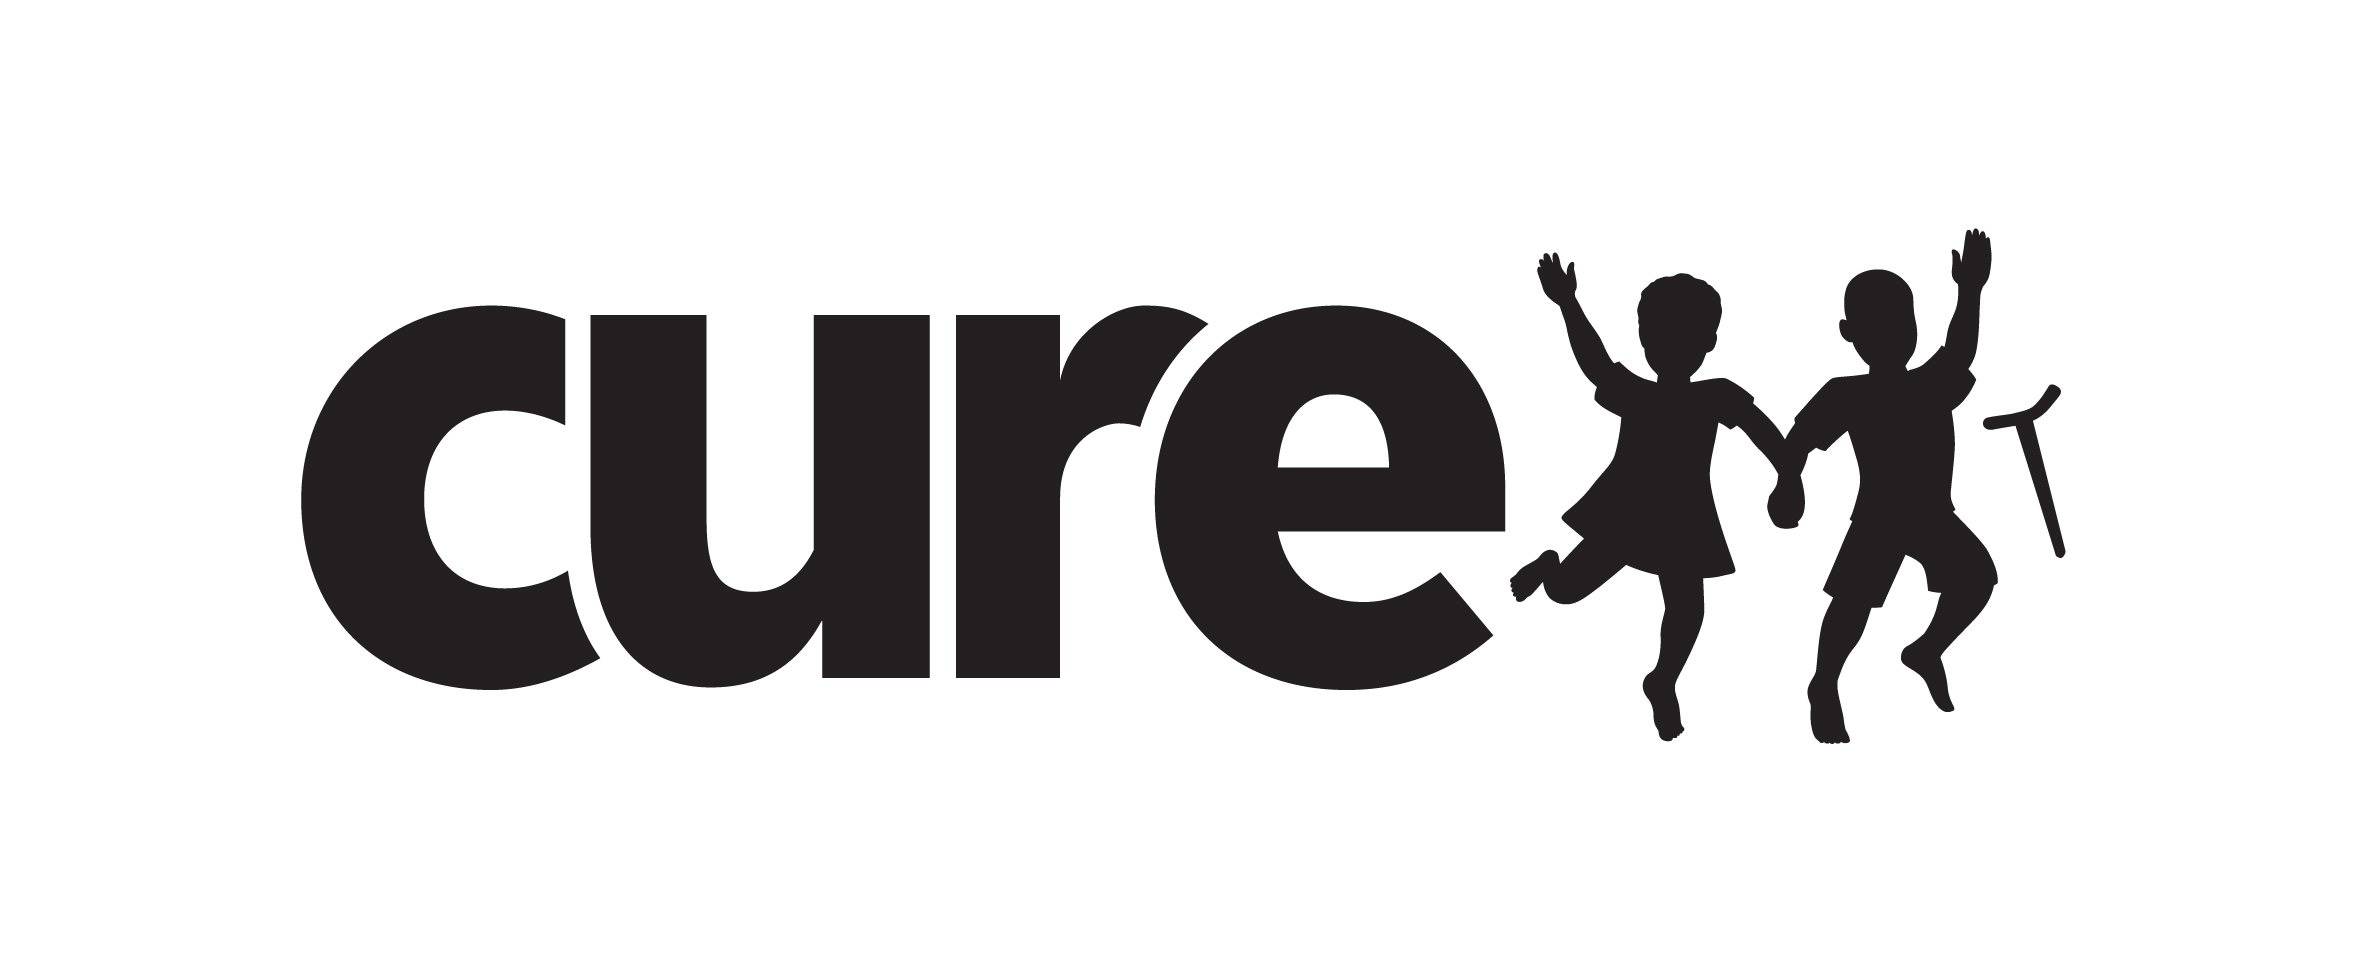 Trademark Logo CURE